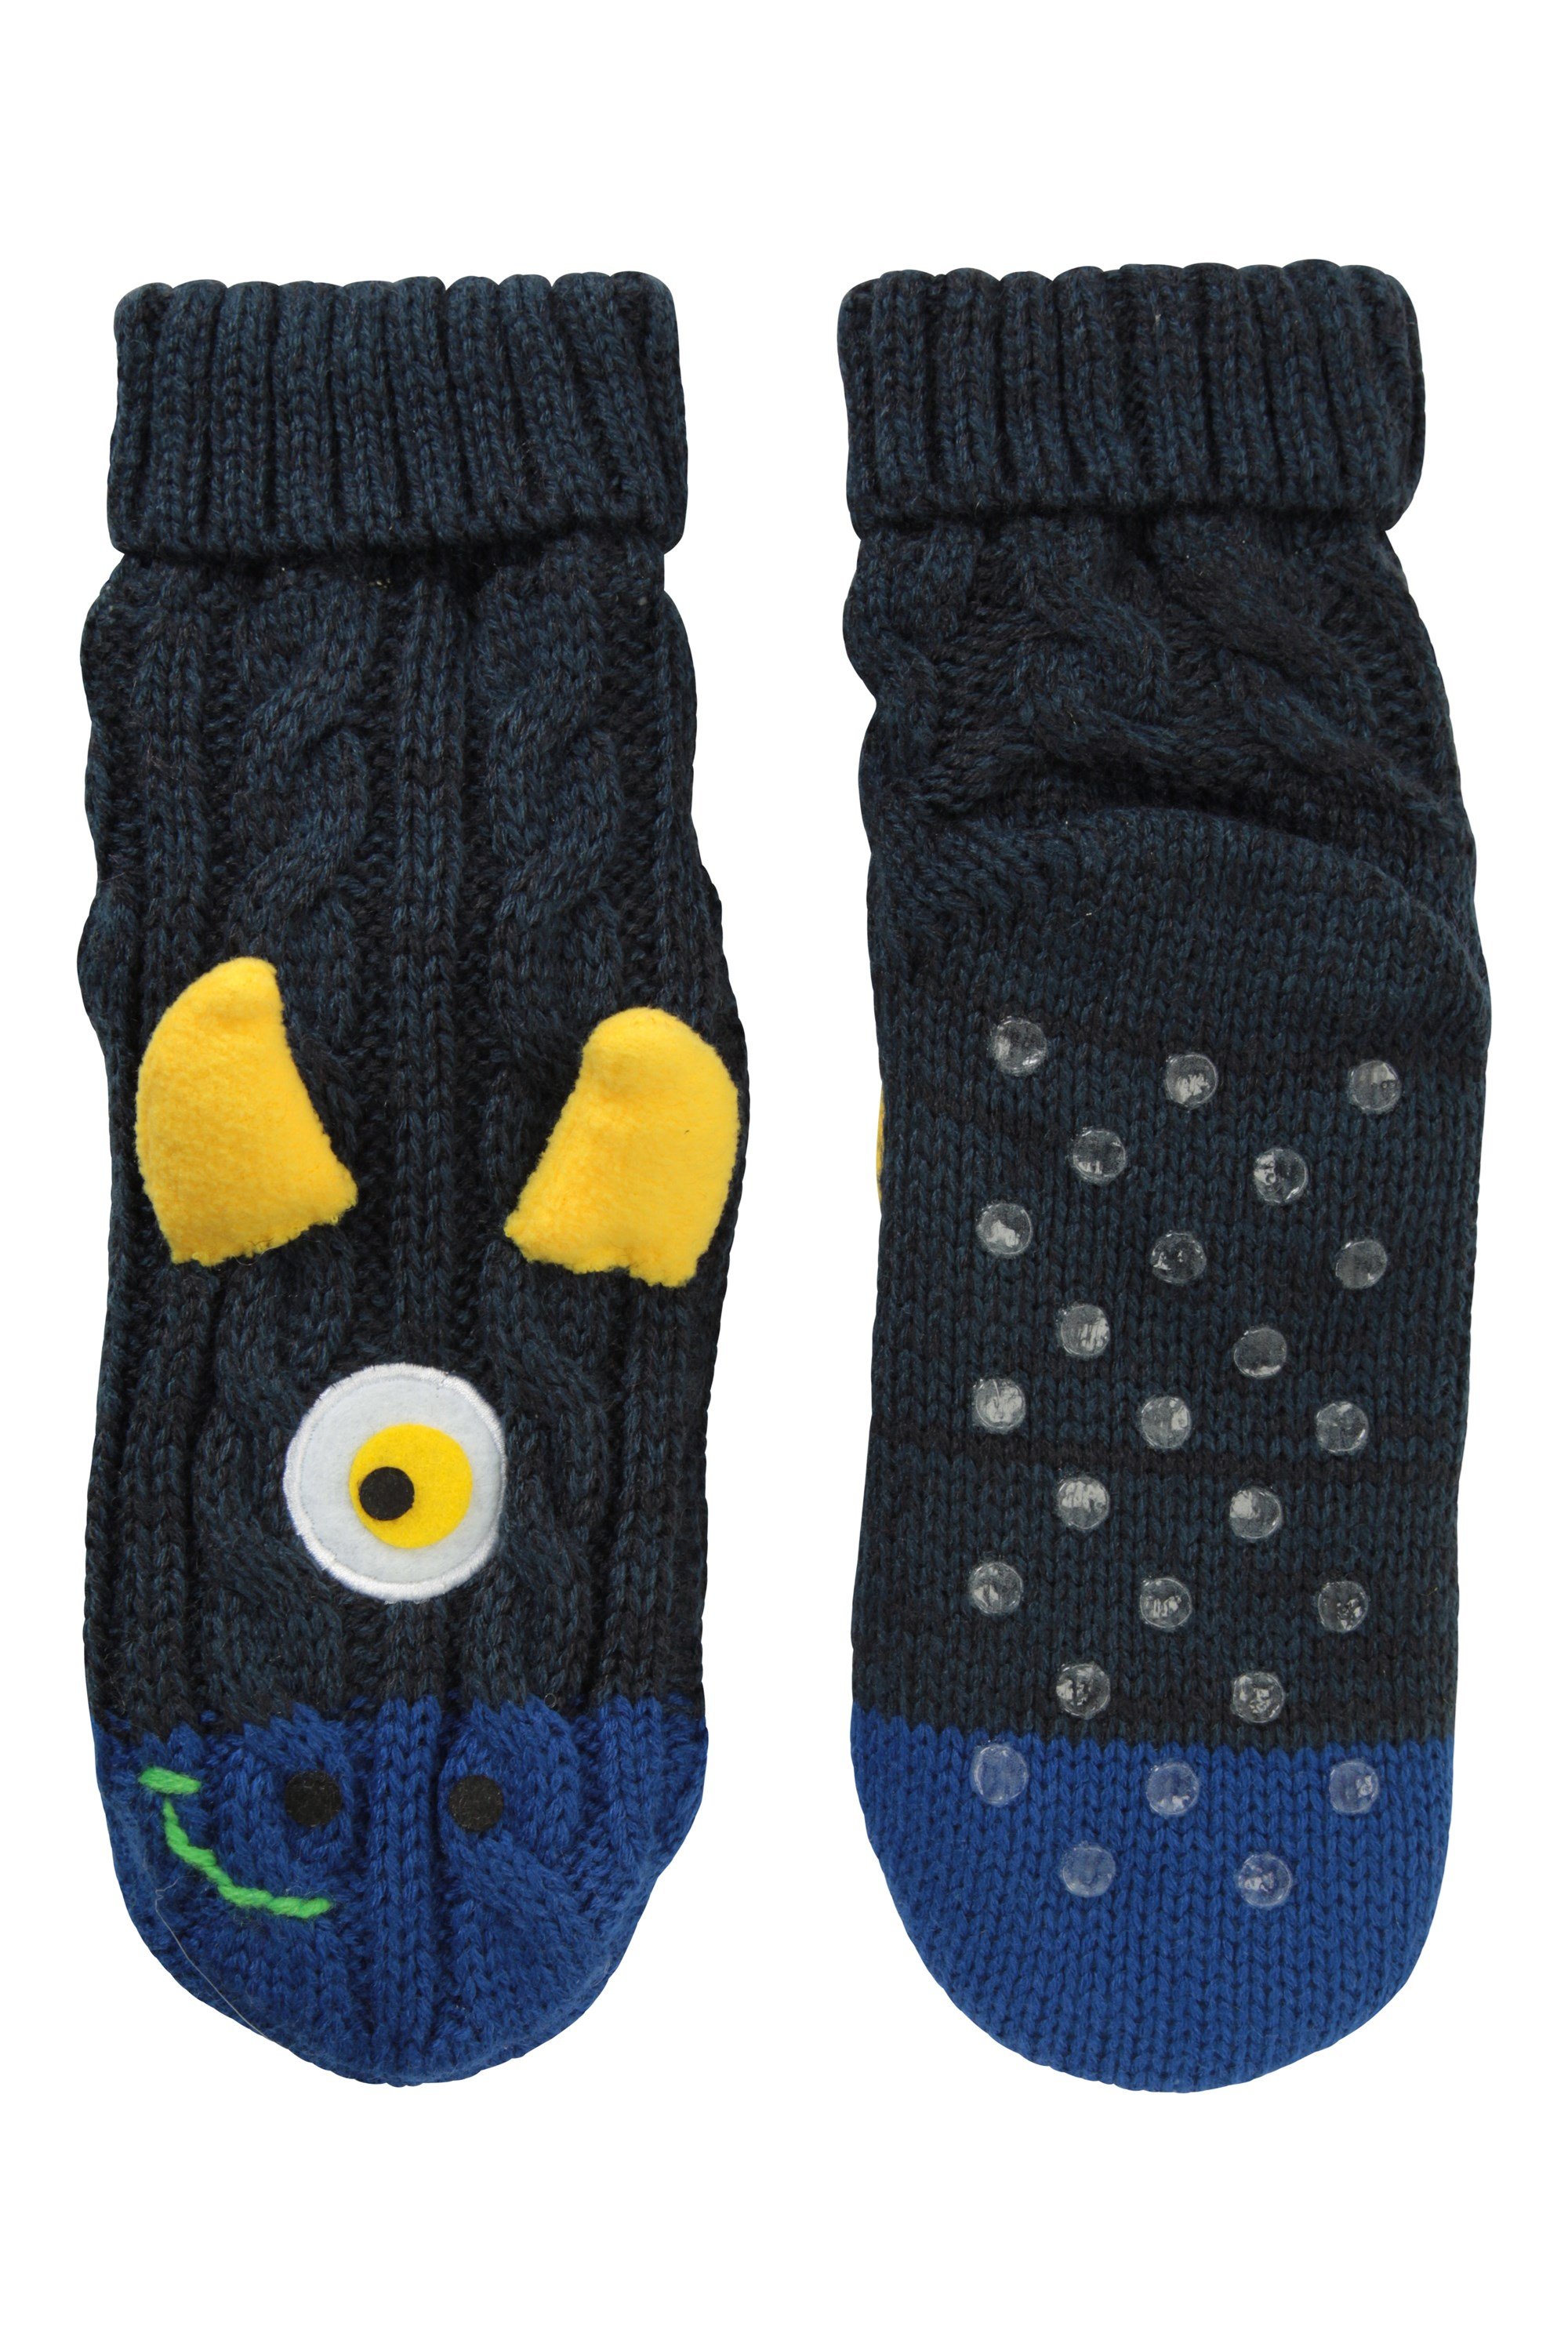 2 Pairs Kids Ski Socks Ghope Kids Winter Socks Snowboarding Snowboard Socks for Toddler Boys Girls 